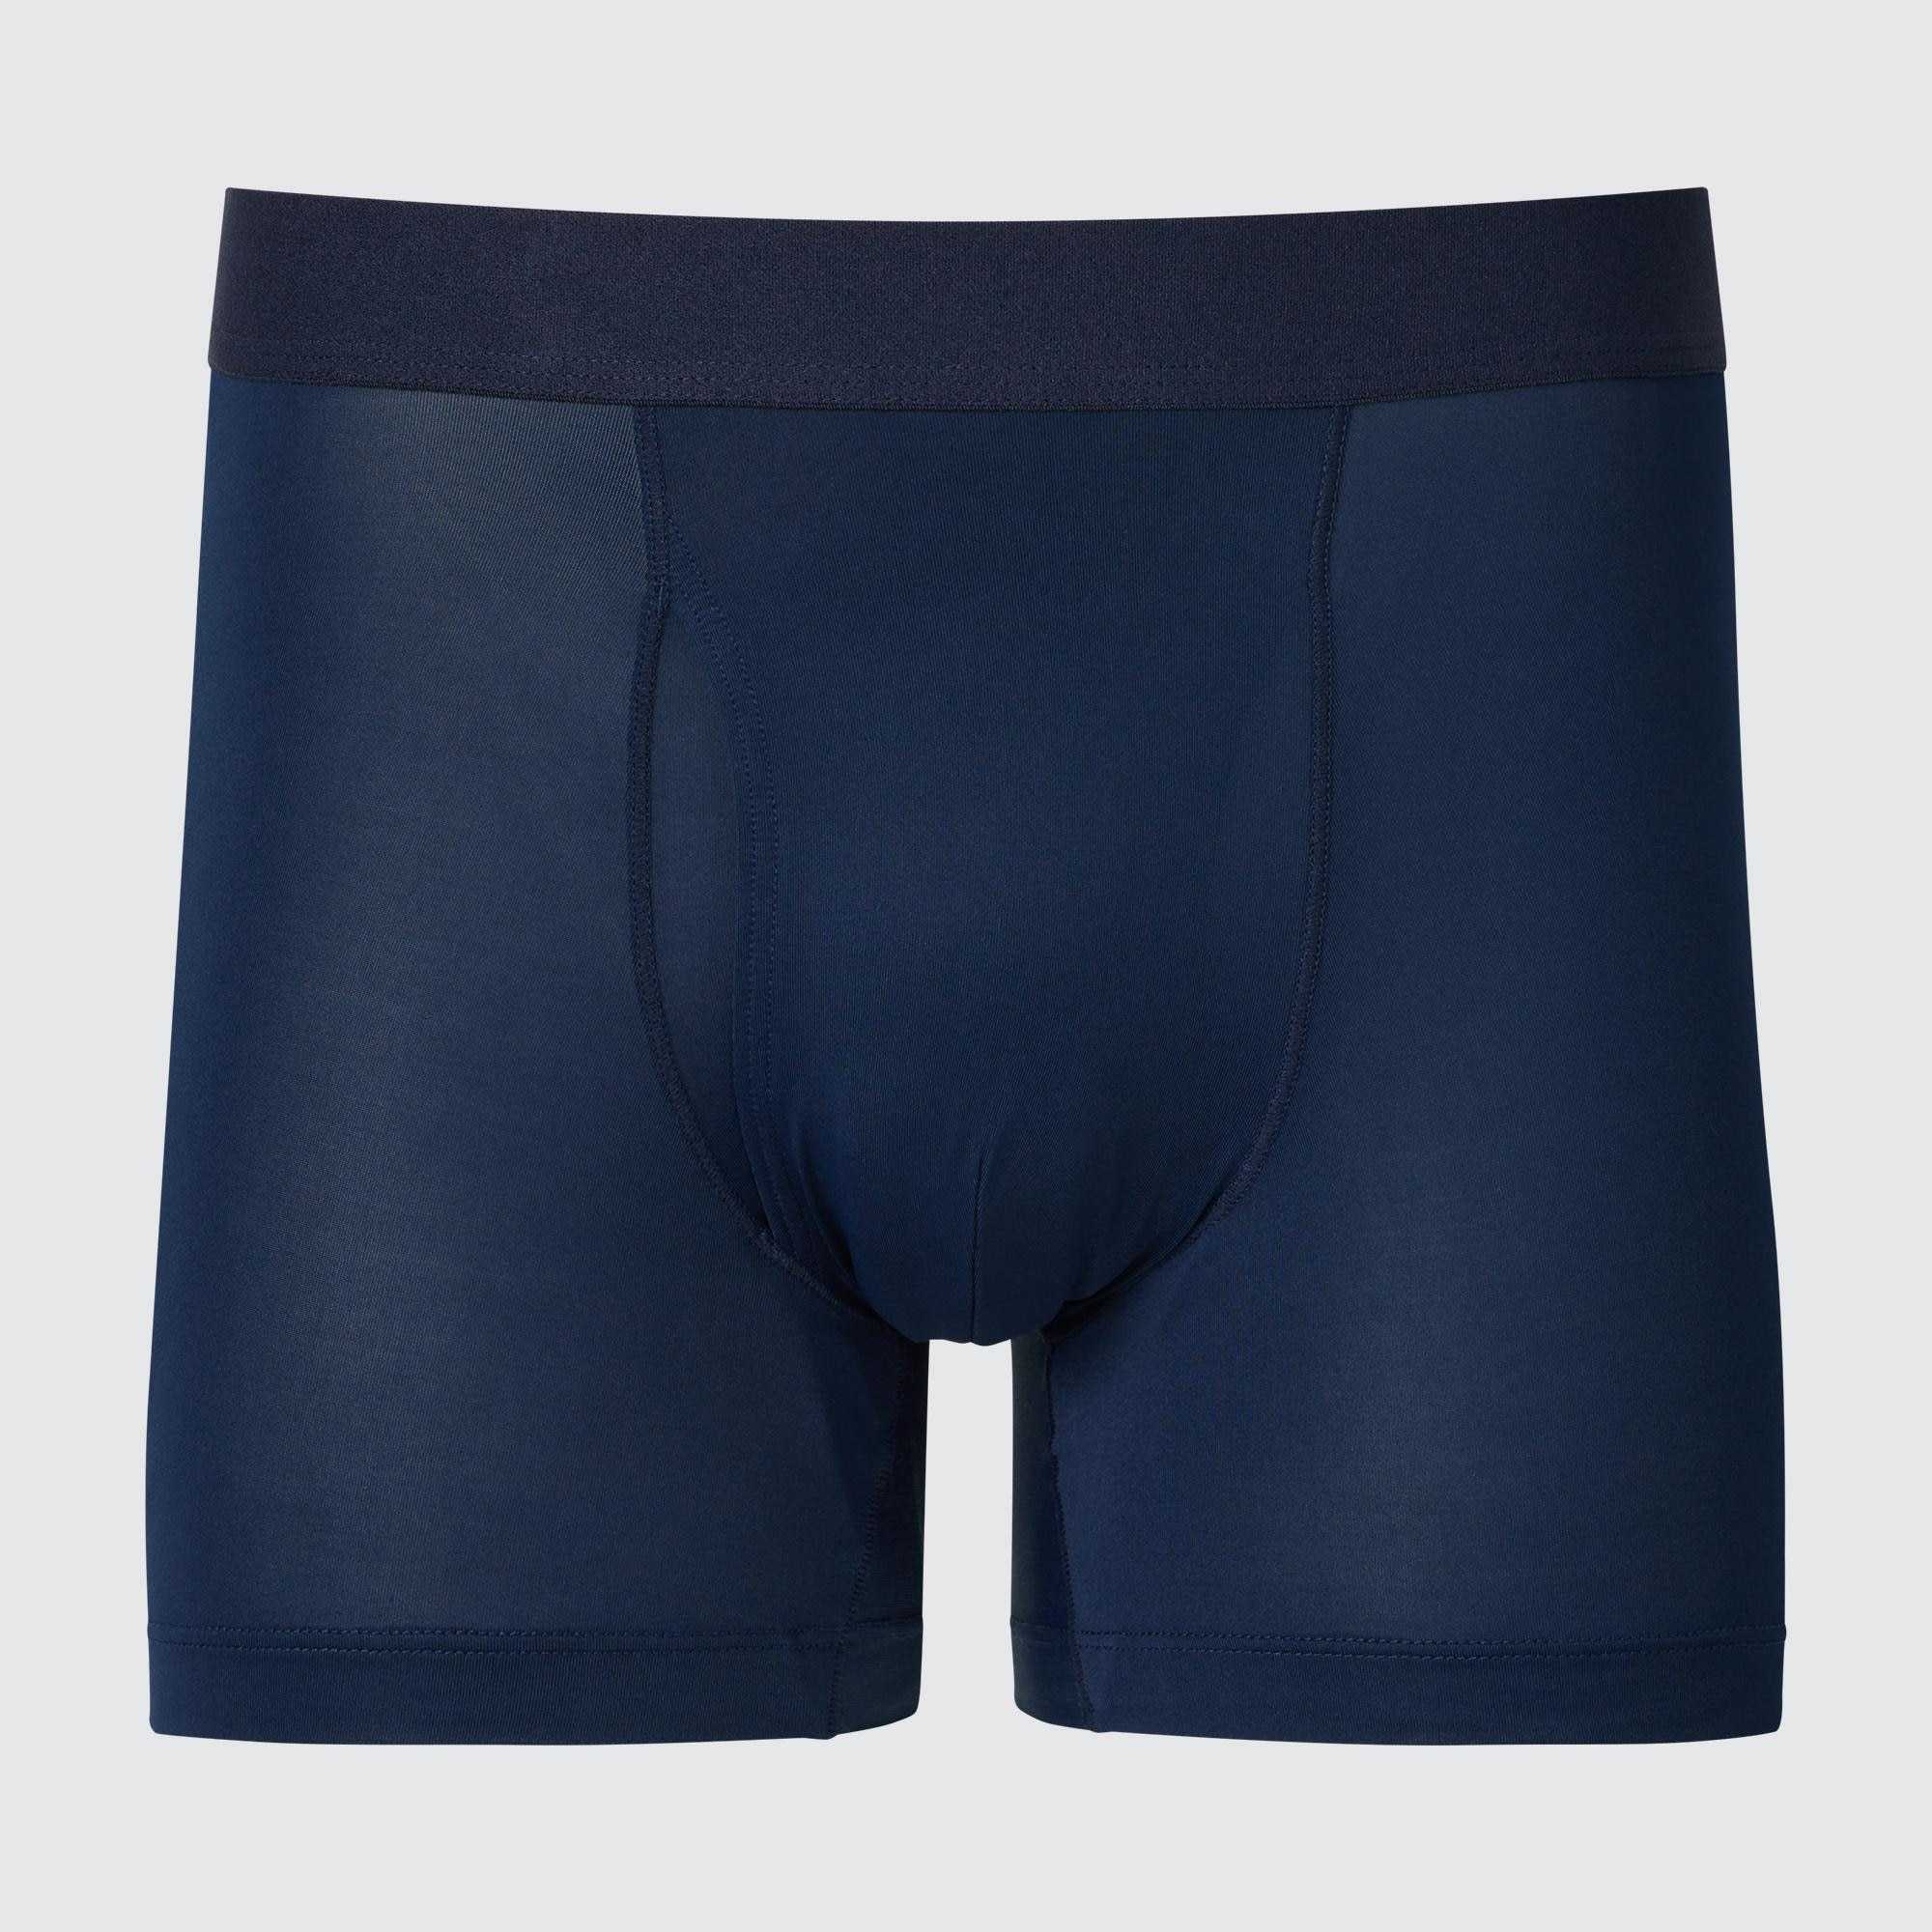 New Style Latest underwear Design - Sale price - Buy online in